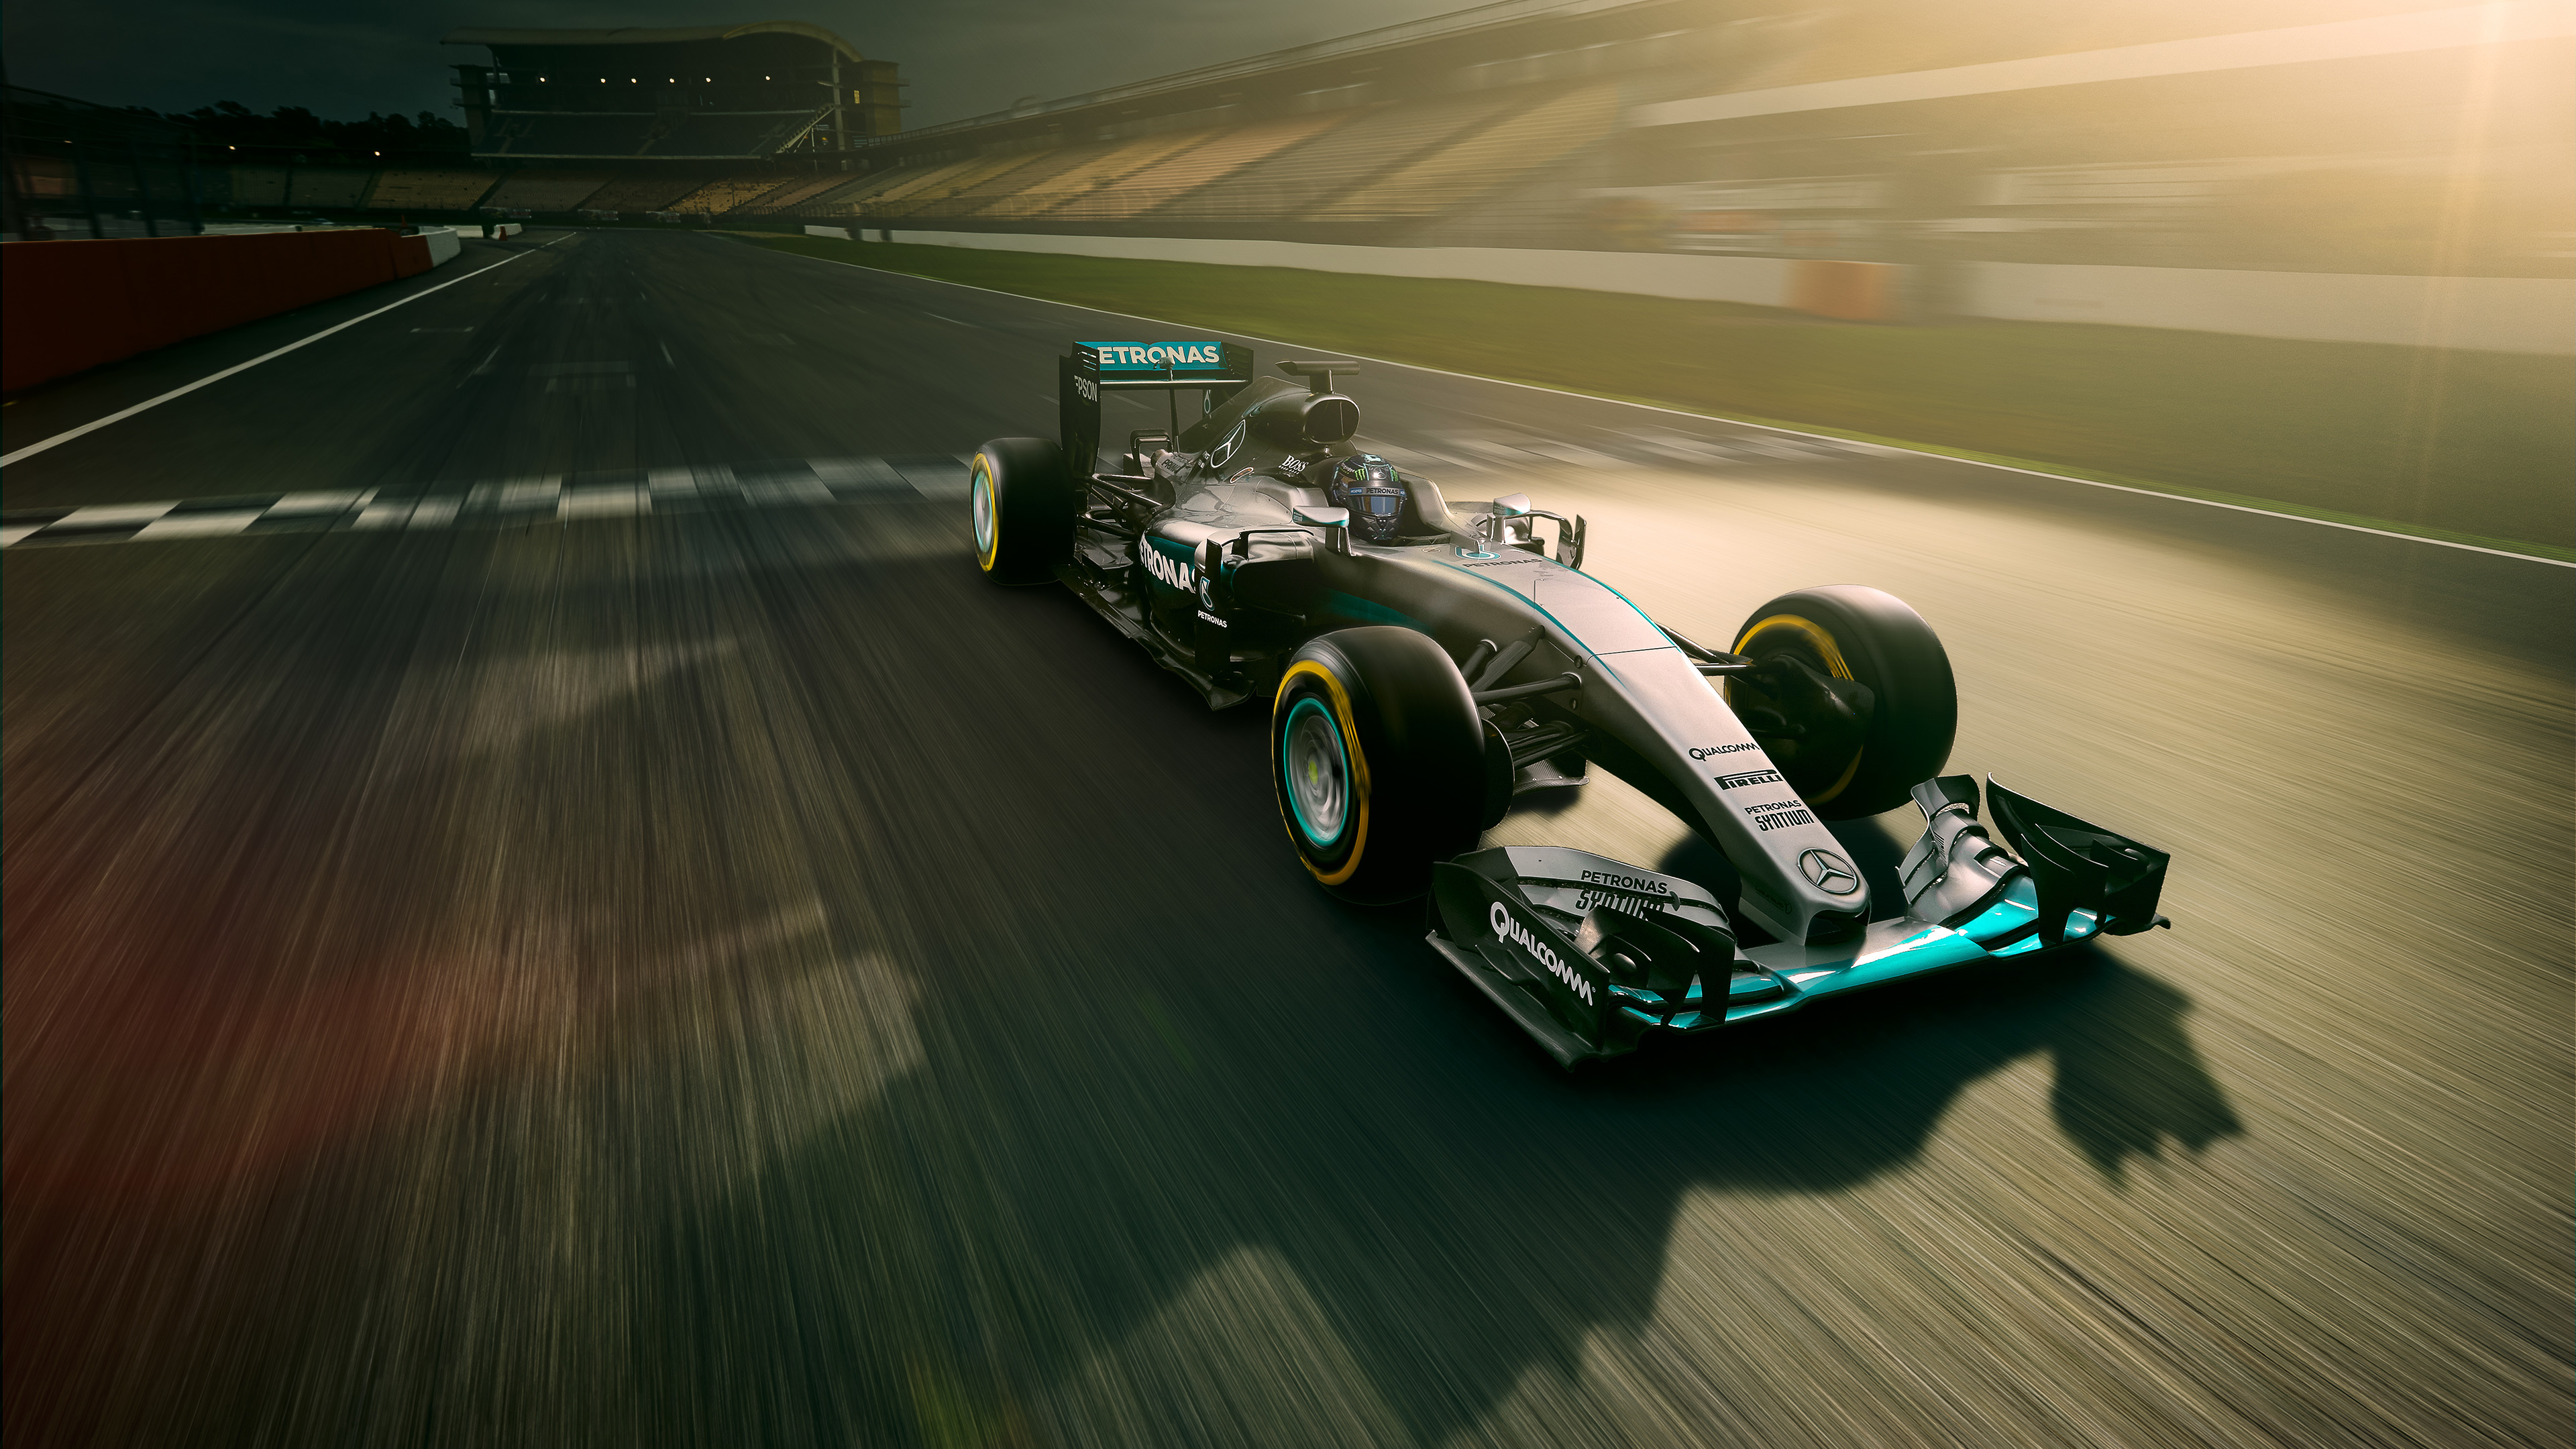 Mercedes F1 in Race track 4K Wallpaper | HD Car Wallpapers ...